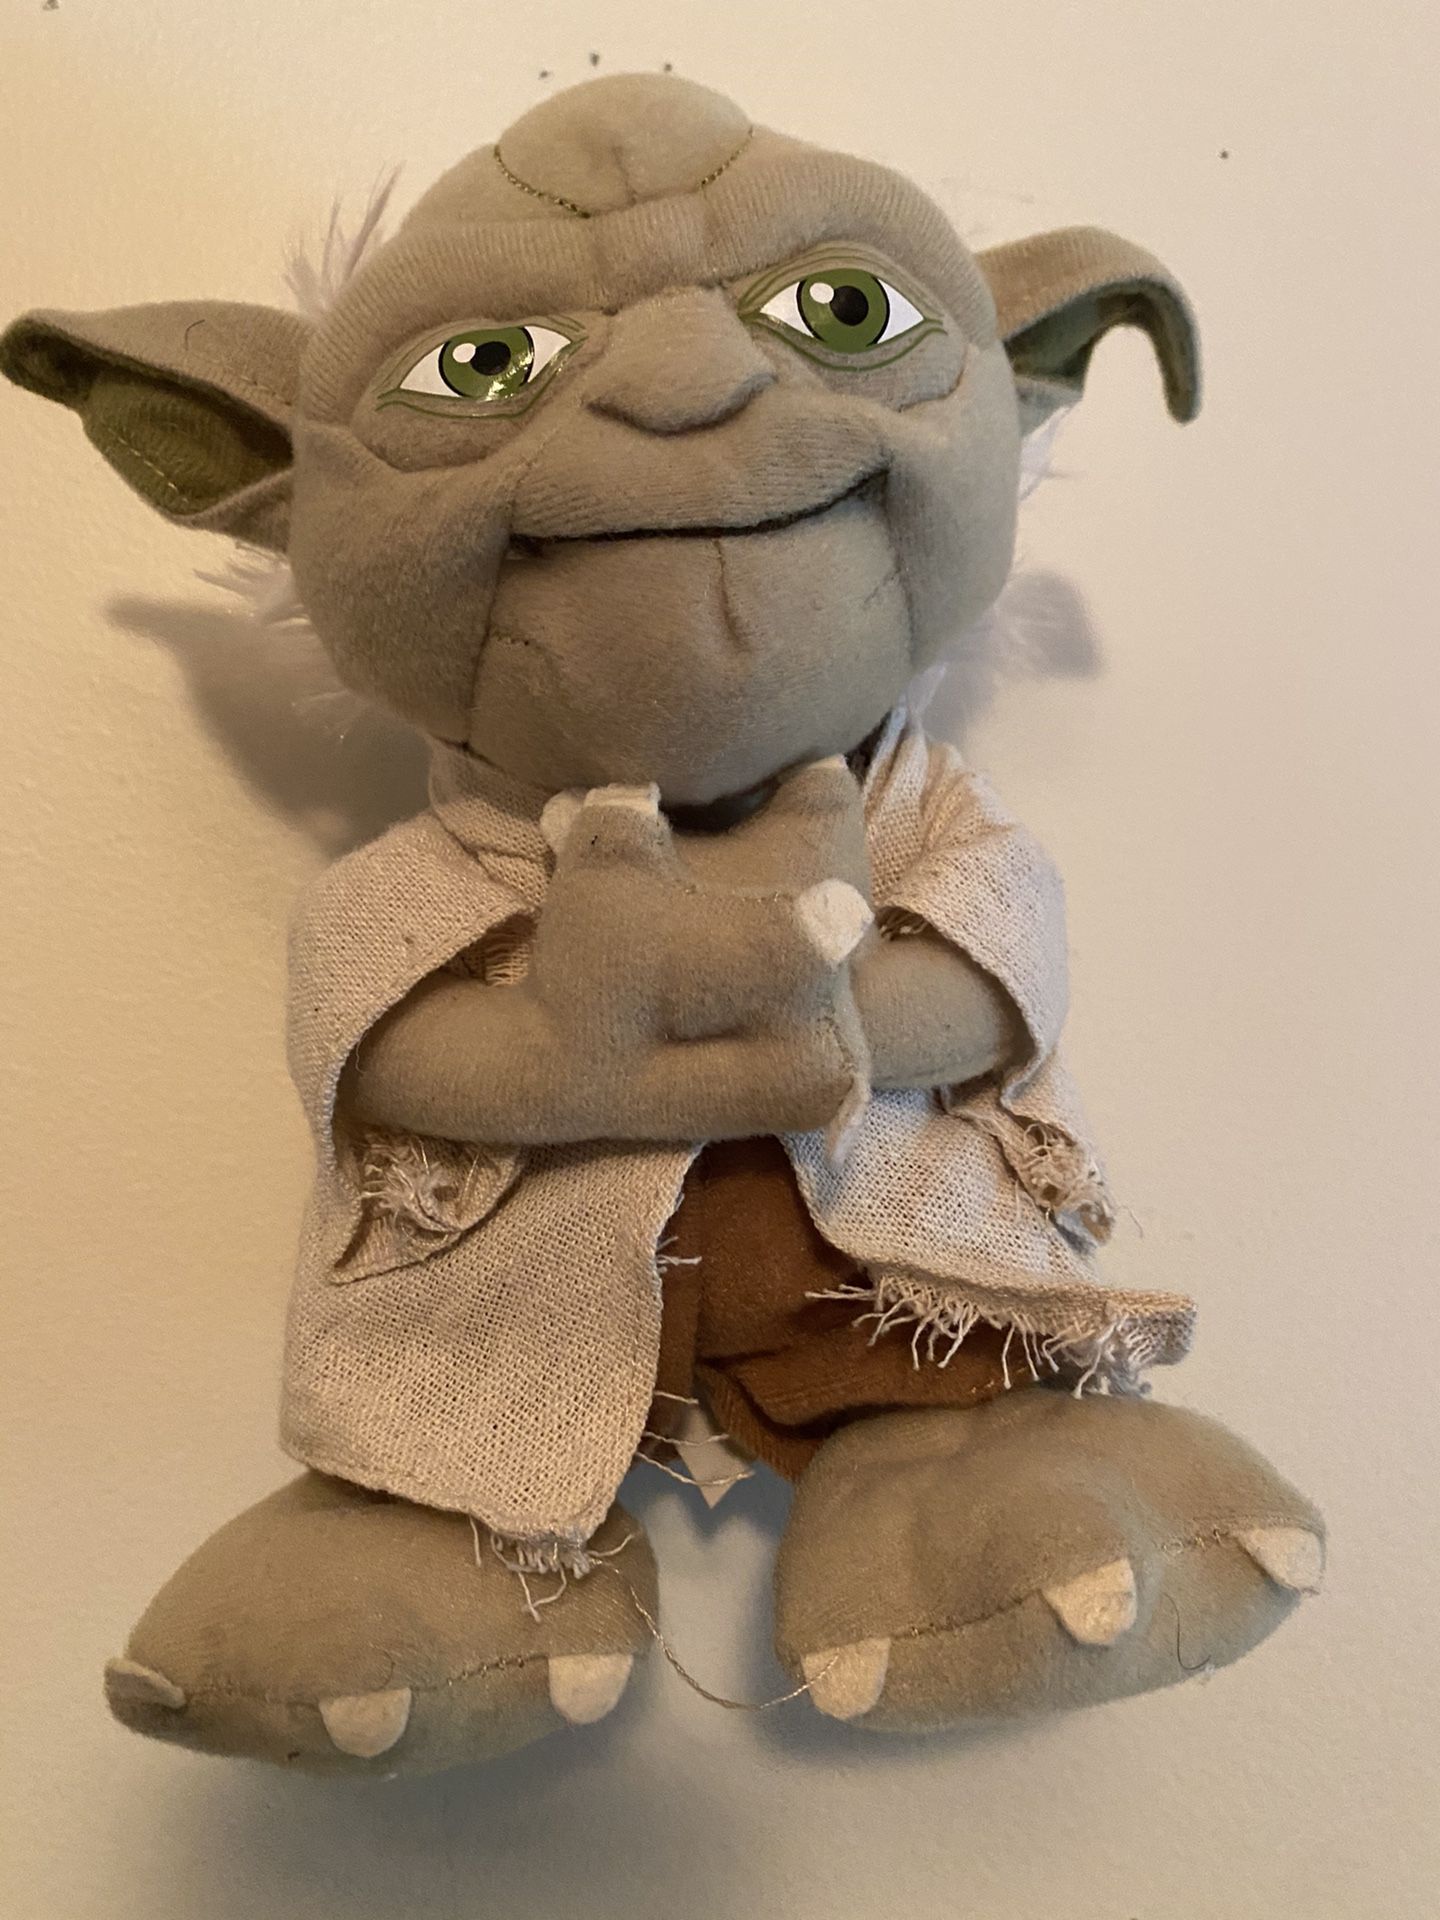 Yoda stuffed animal